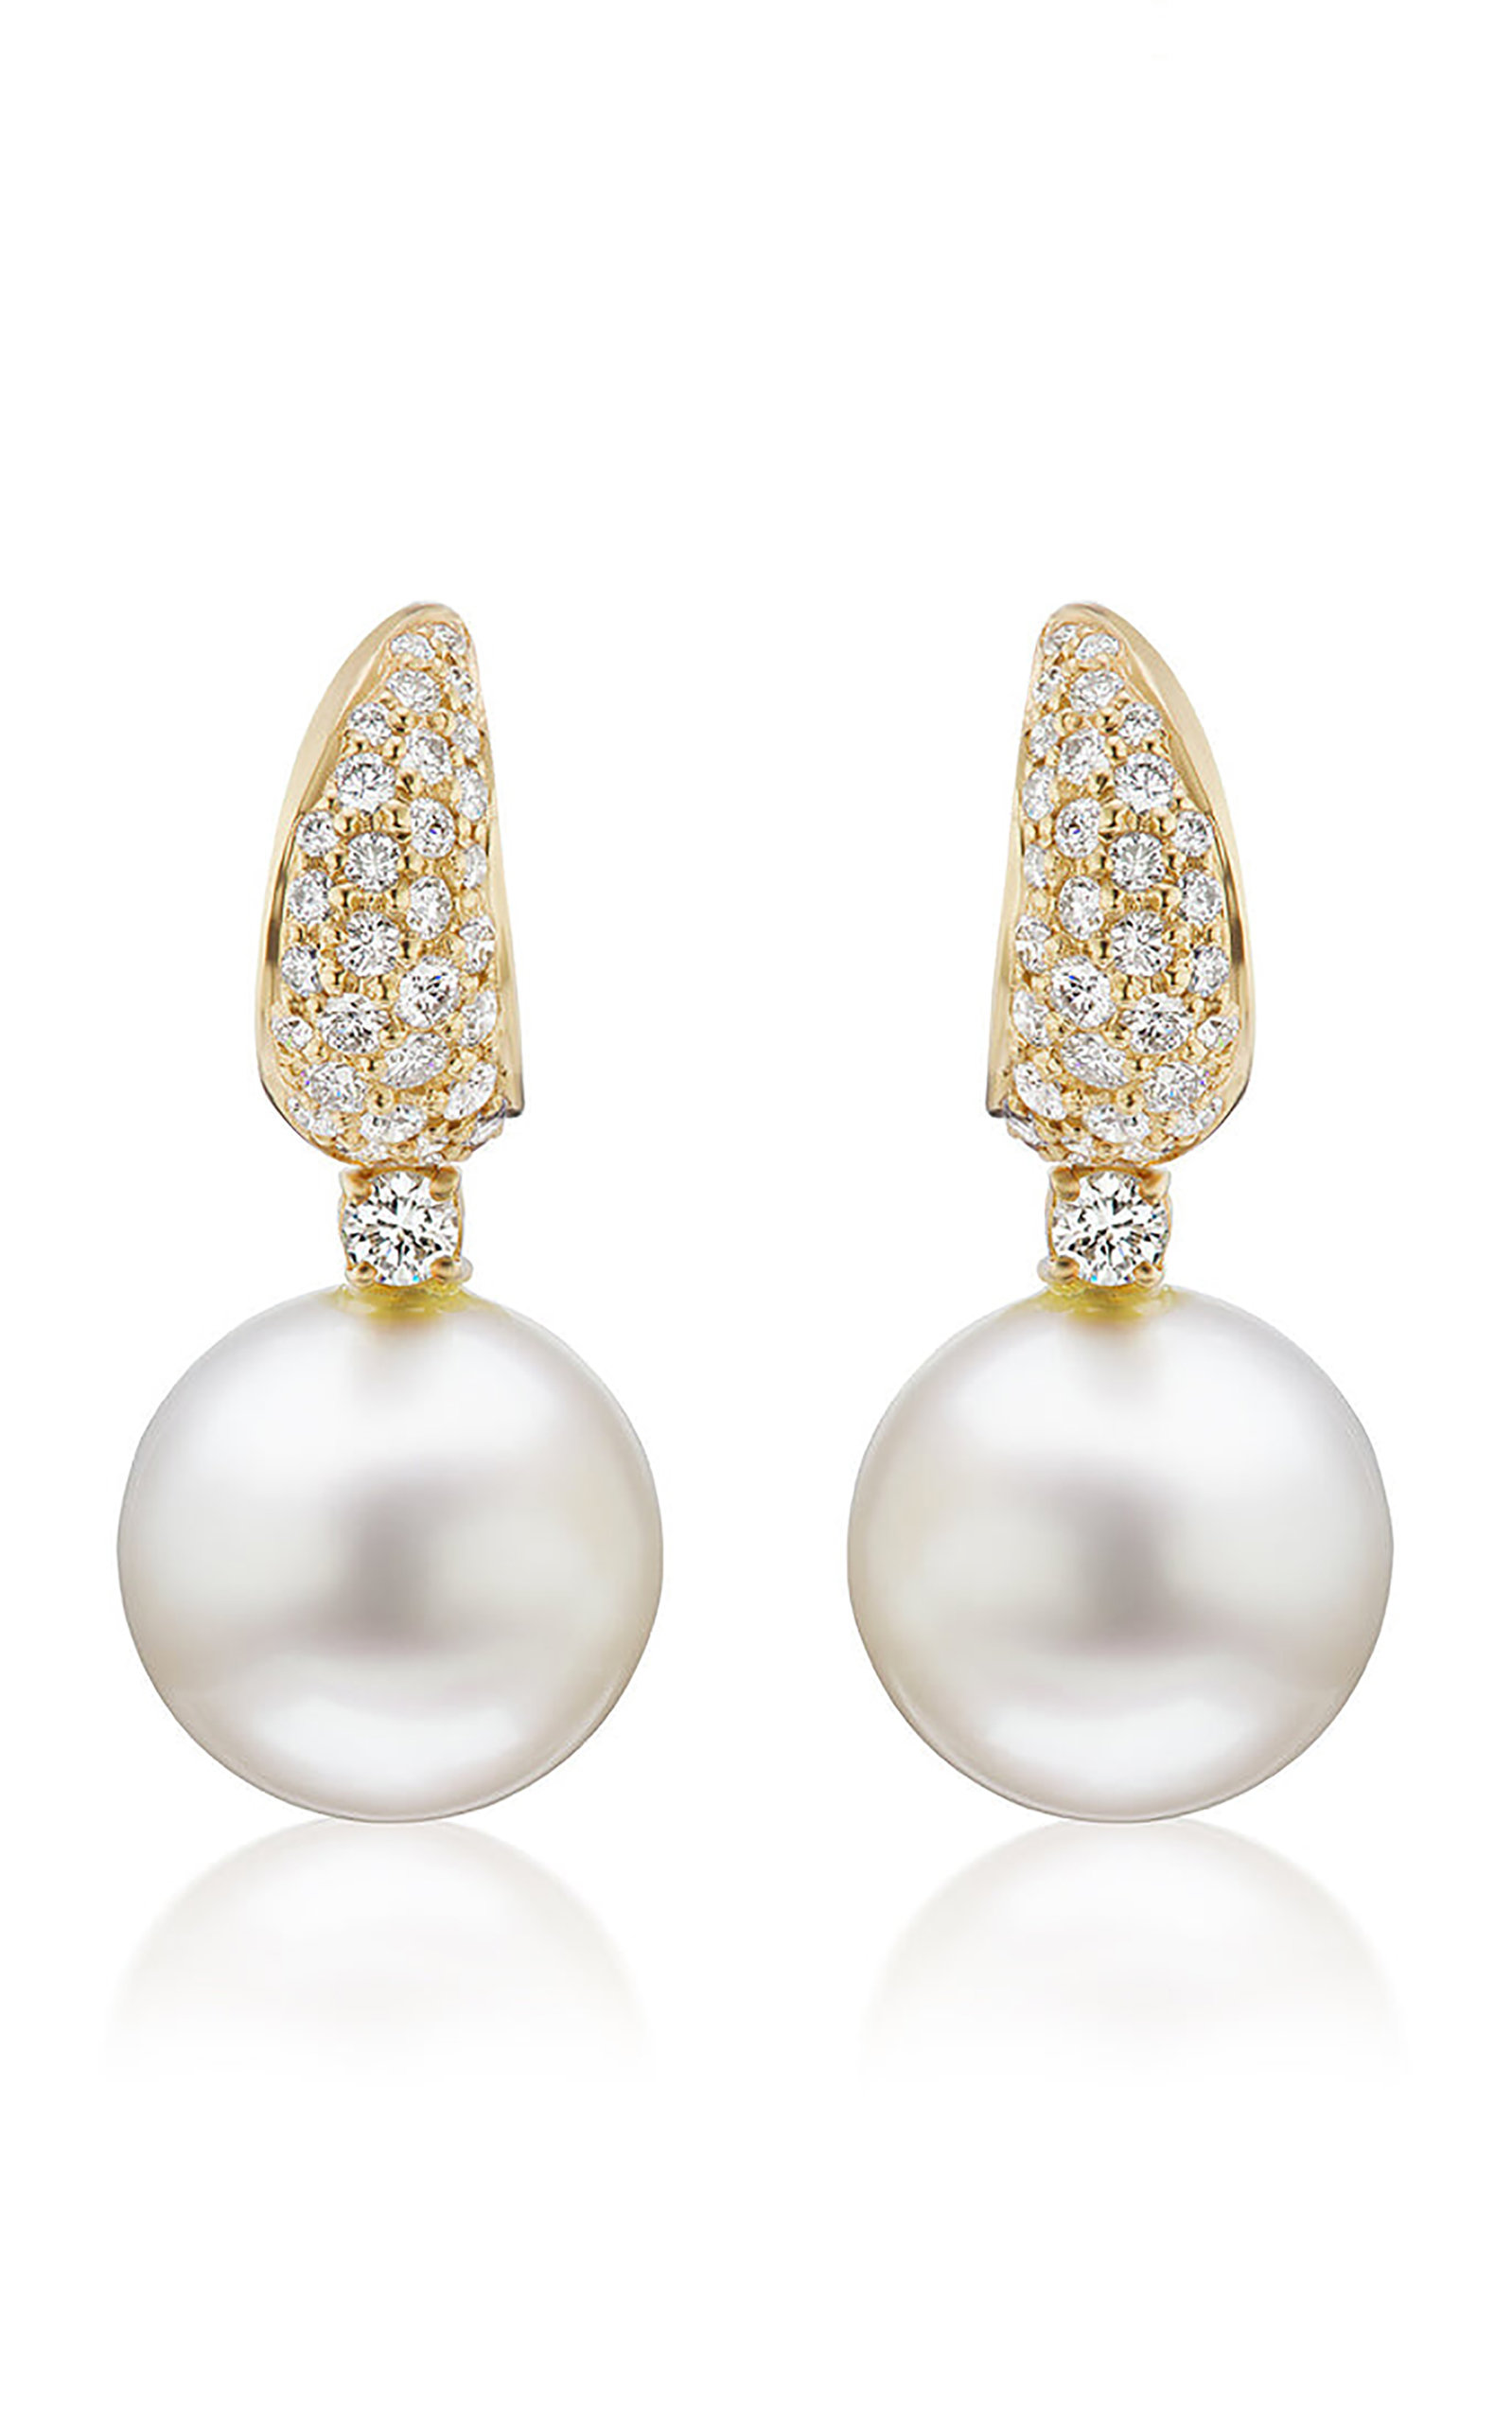 Briony Raymond Women's 18k Yellow Gold Etoile Pearl & Diamond Earrings